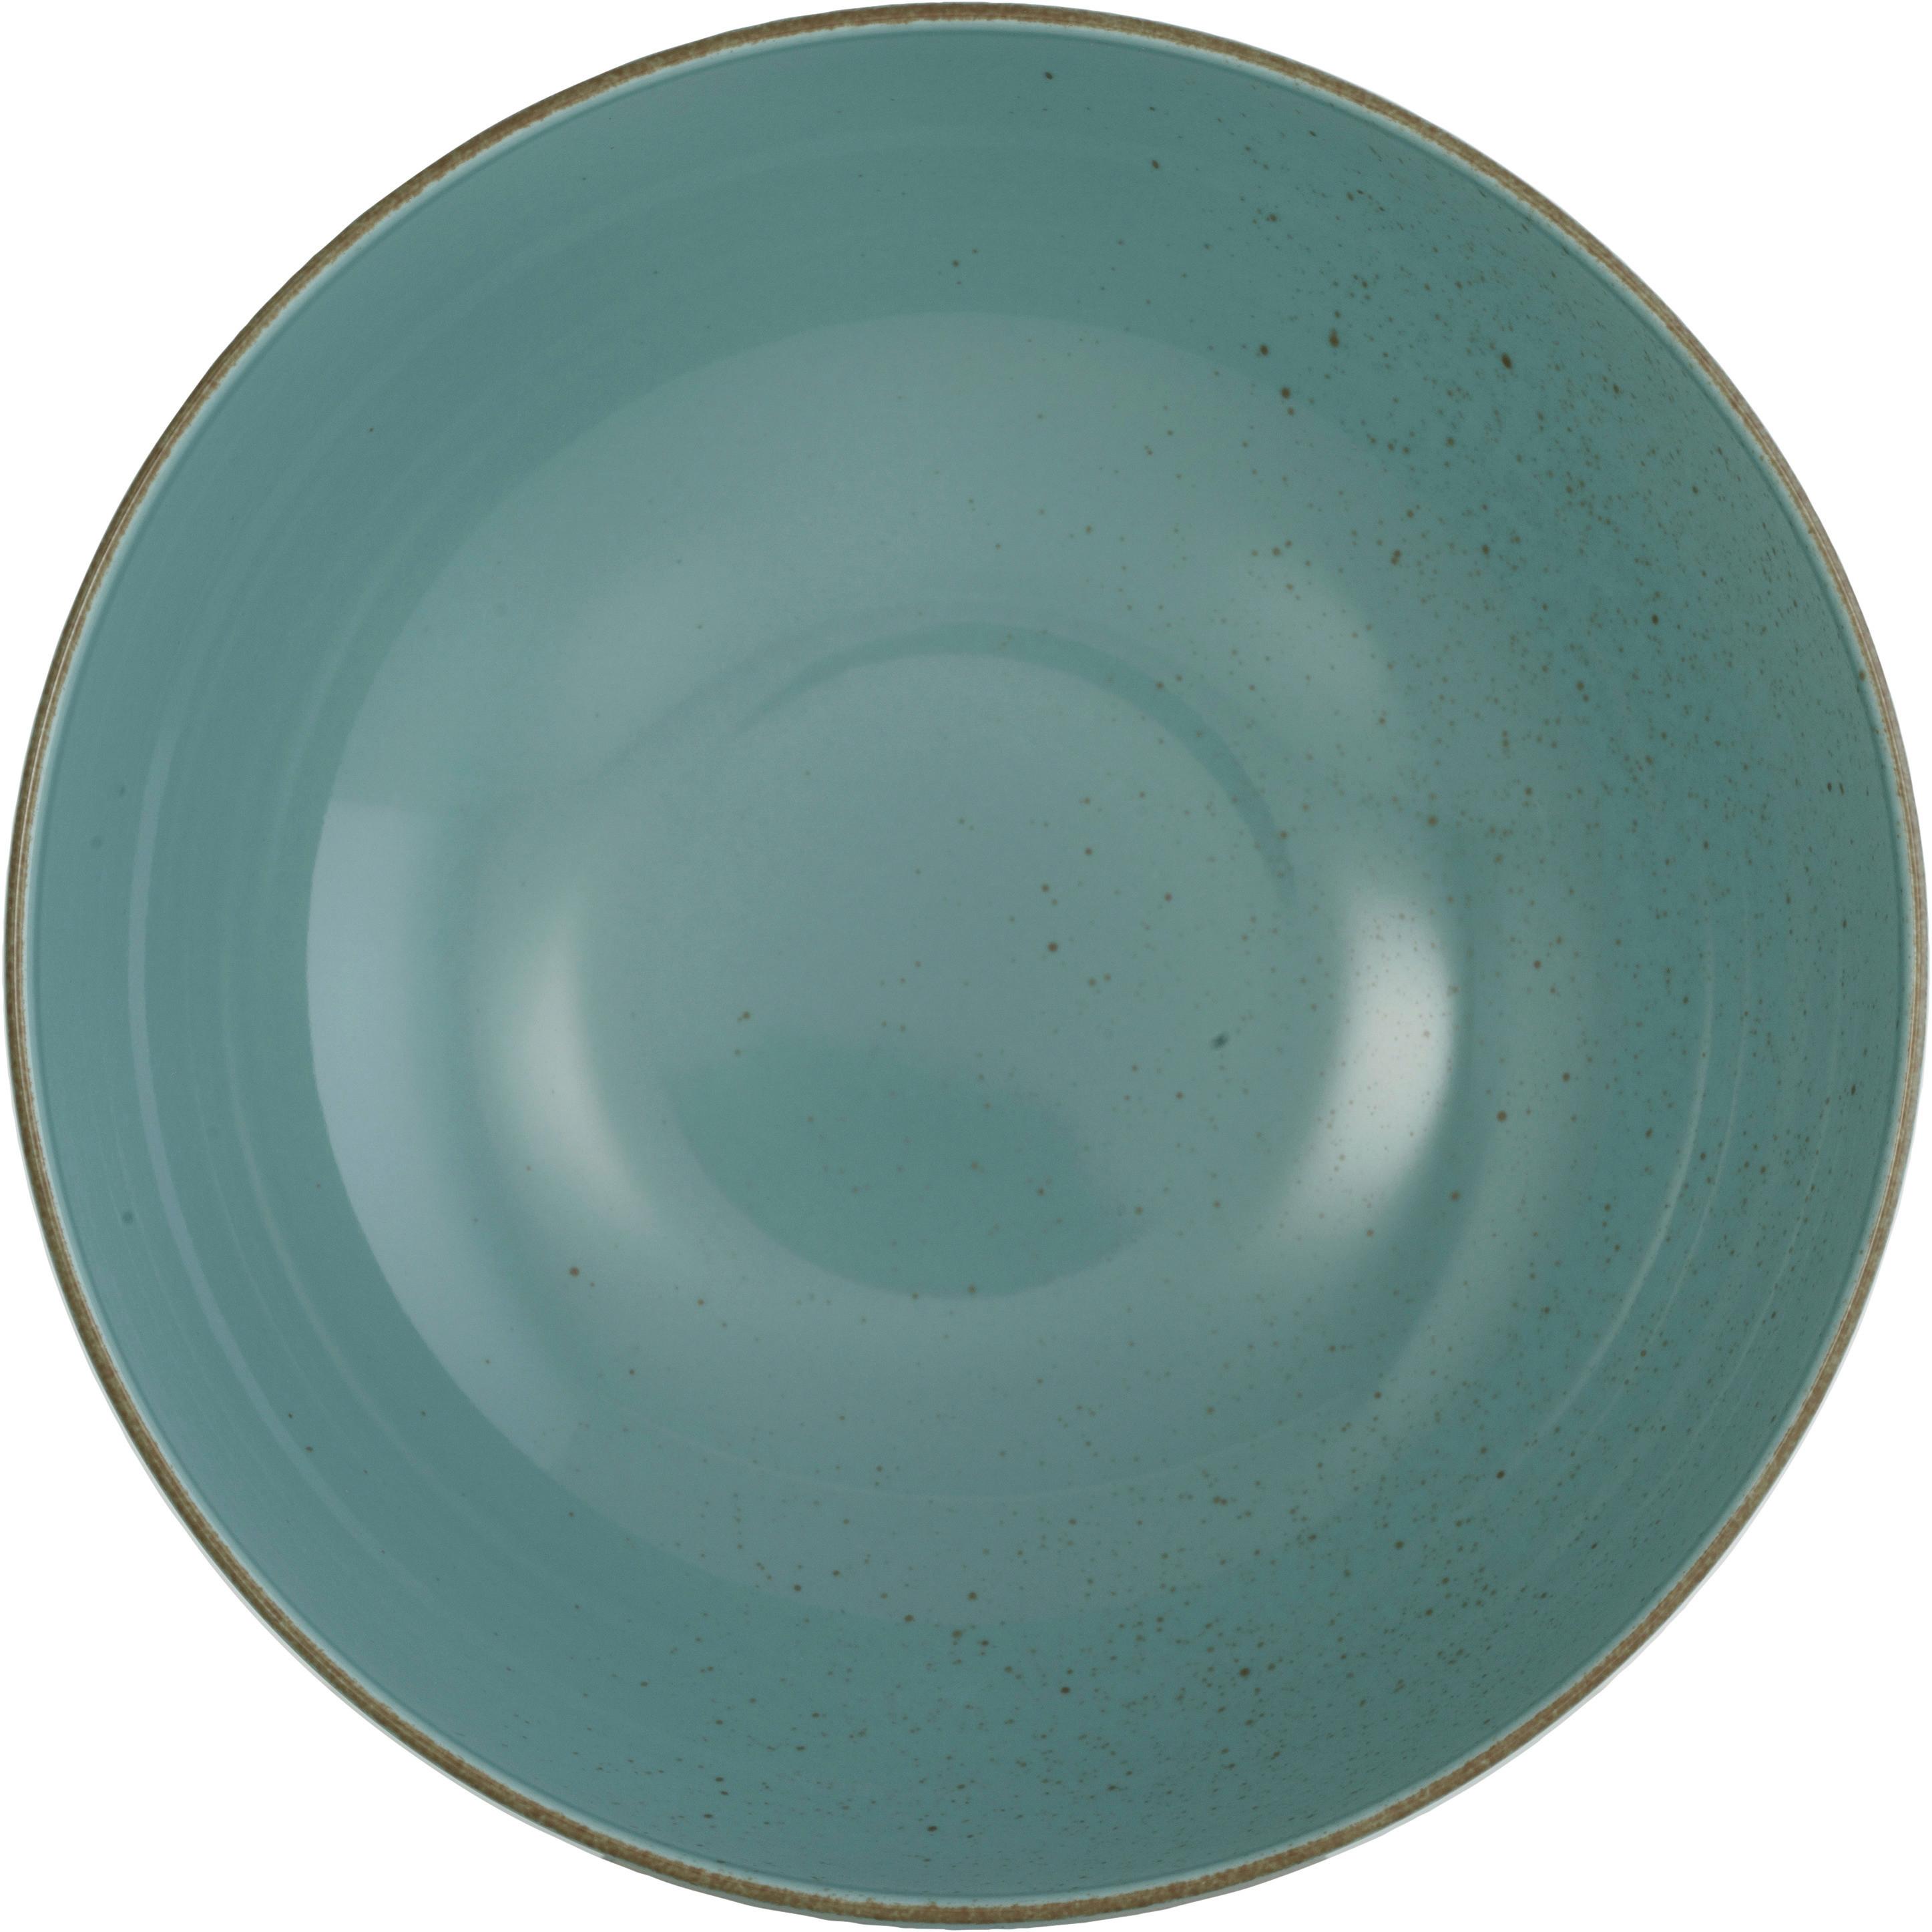 Skleda Za Solato Capri - zelena, Moderno, keramika (25/25/8cm) - Premium Living